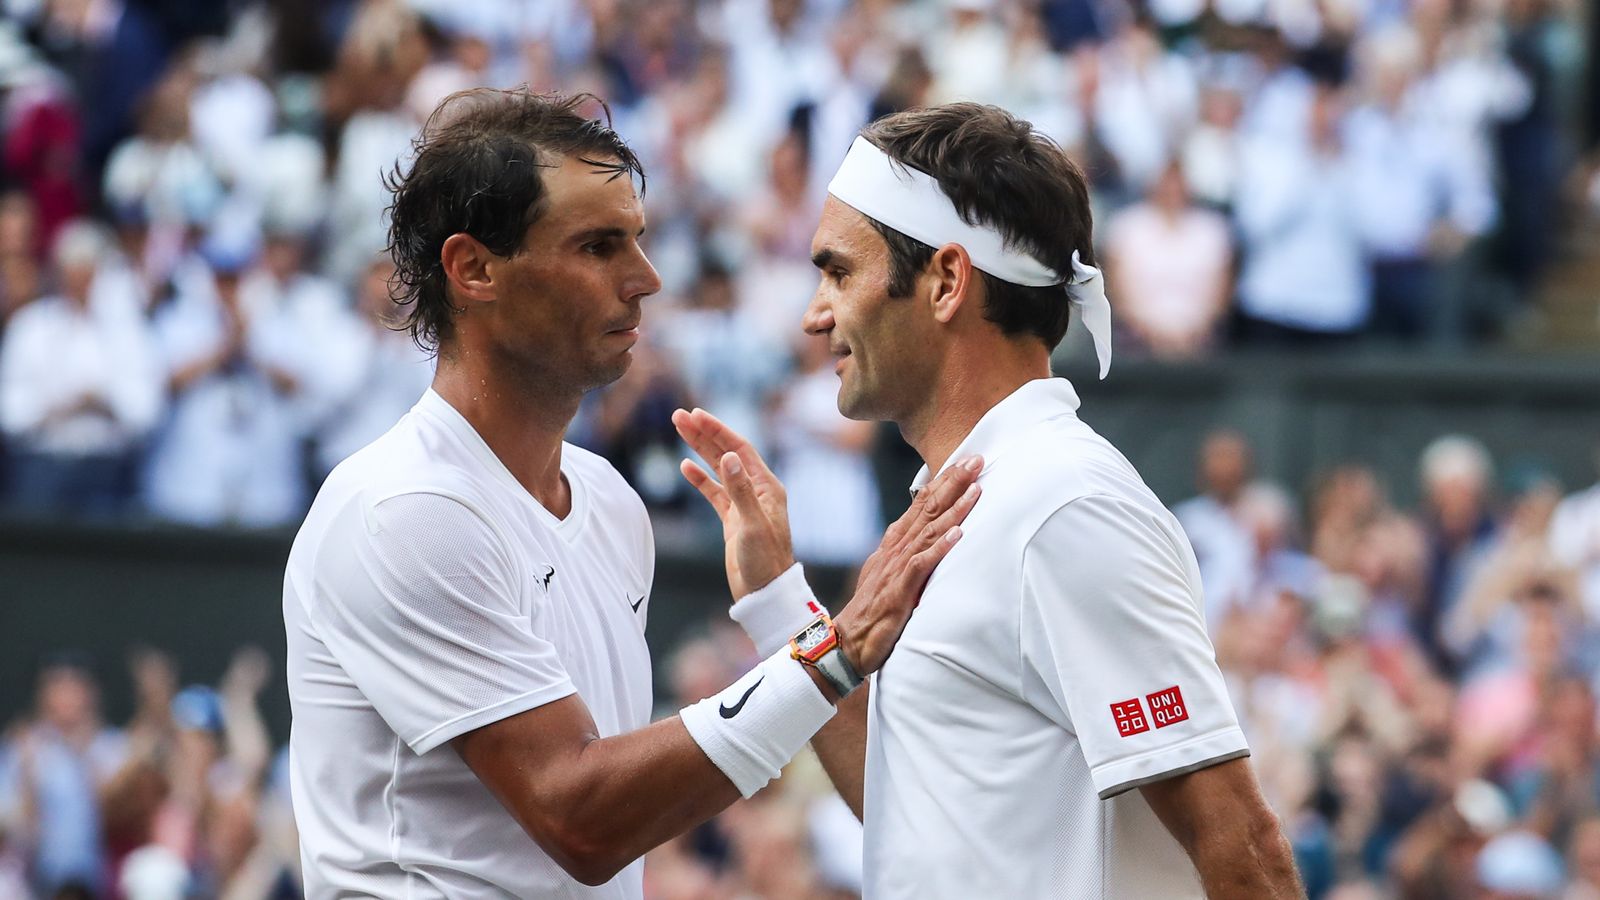 Weltrekord Federer gegen Nadal vor 80.000 Zuschauern? Tennis News Sky Sport